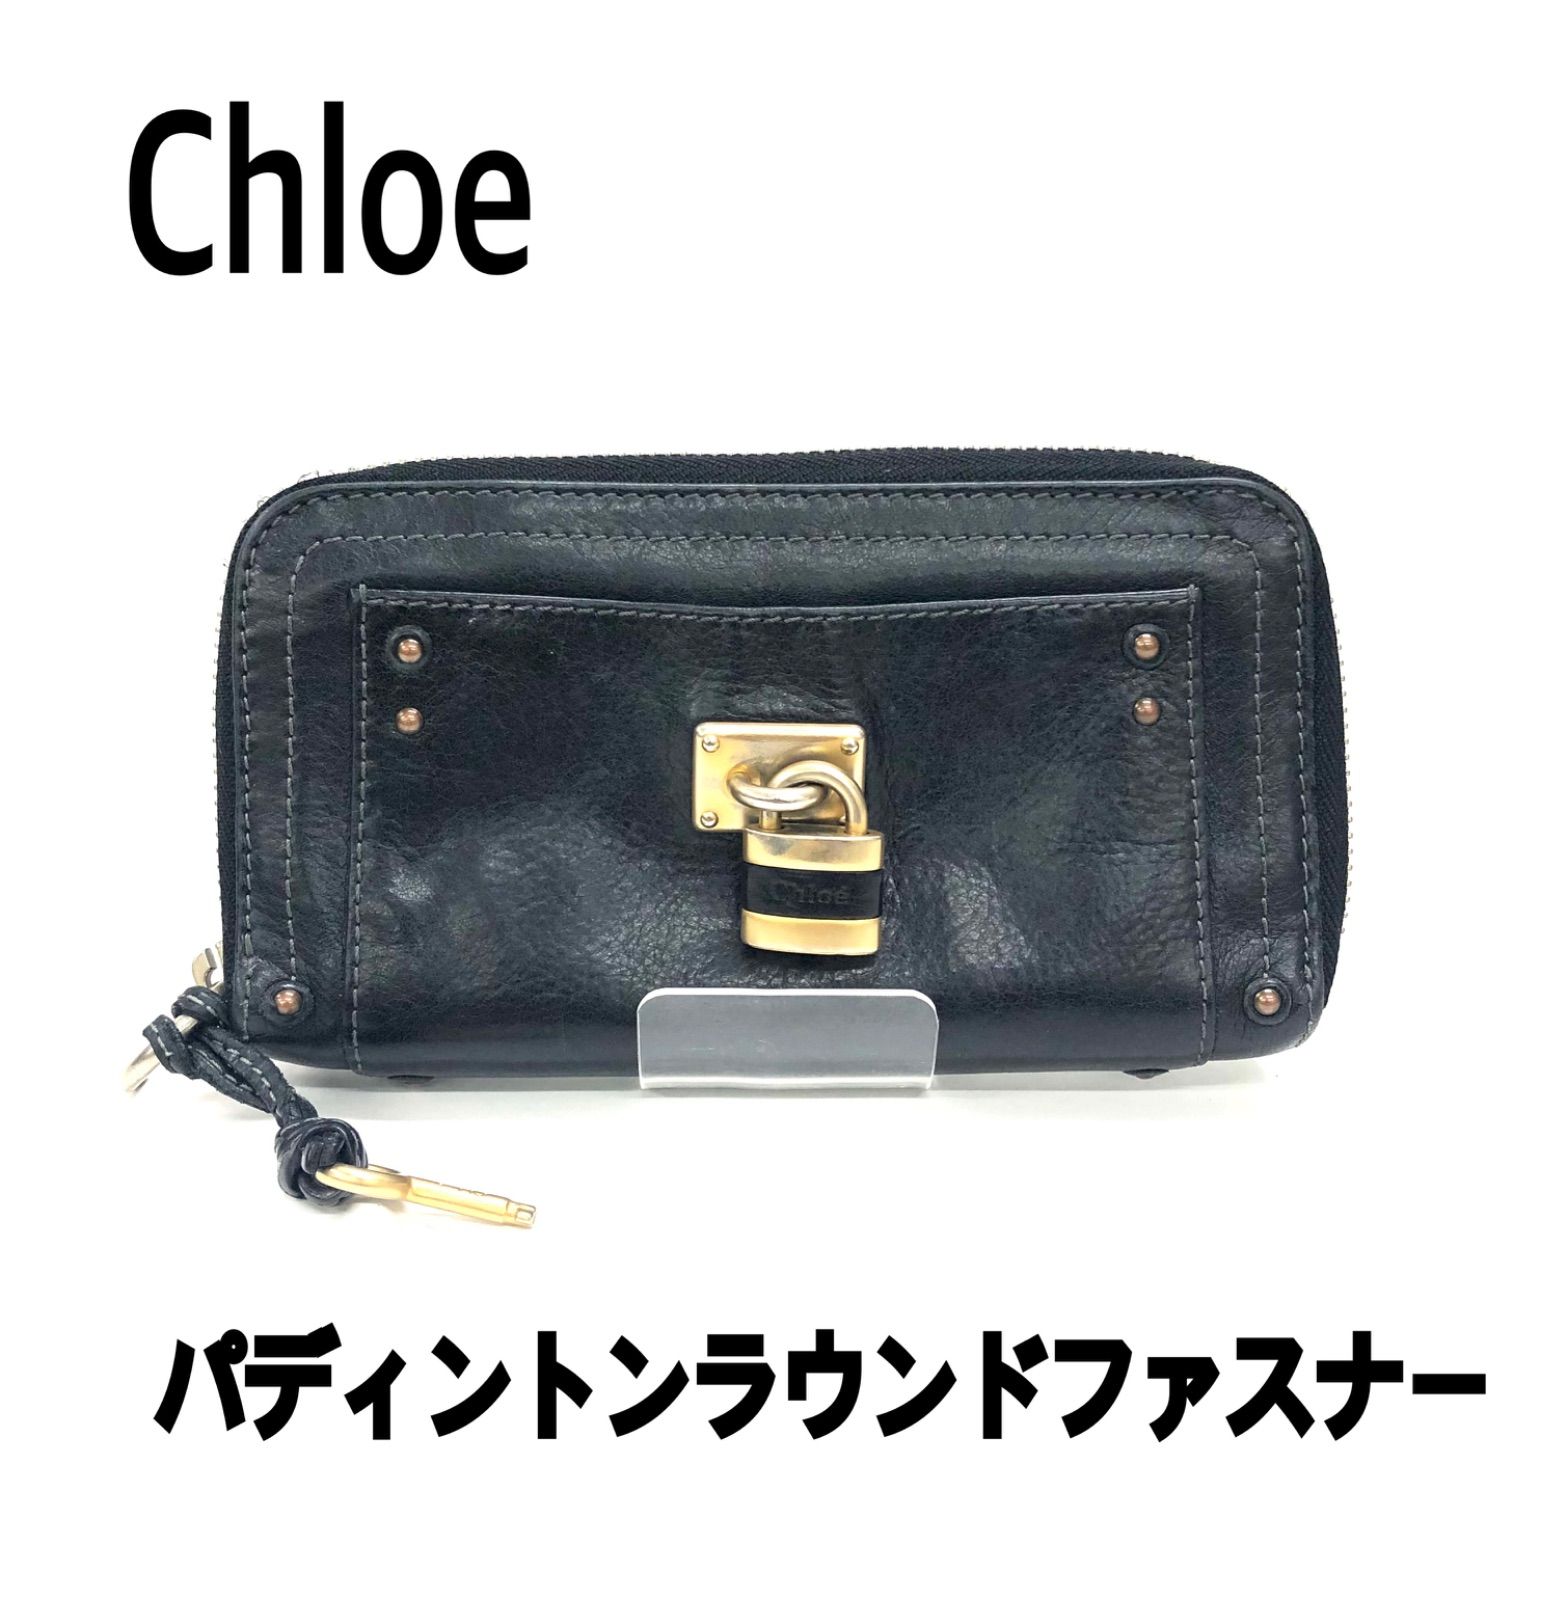 Chloe クロエ パディントンラウンドファスナー ウォレット 黒 長財布